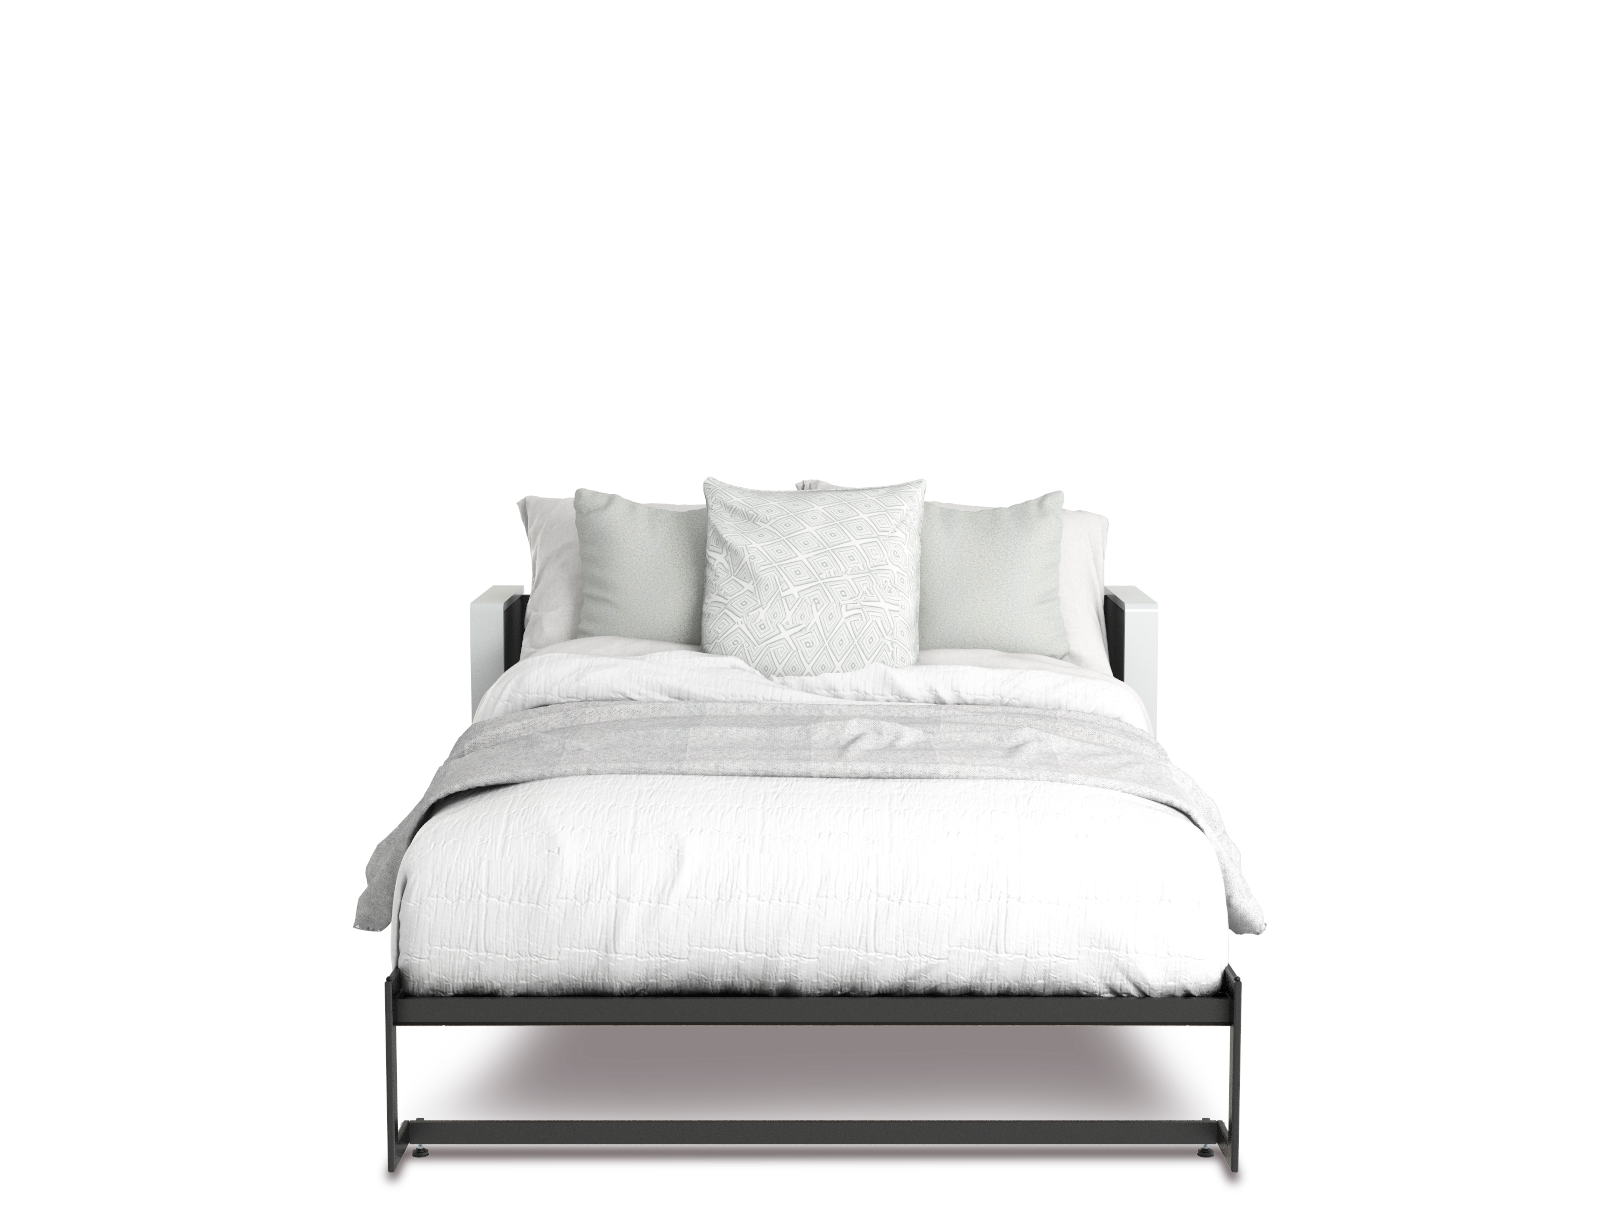 Esentelle base de cama queen size con laminado de madera color tzalam // MS